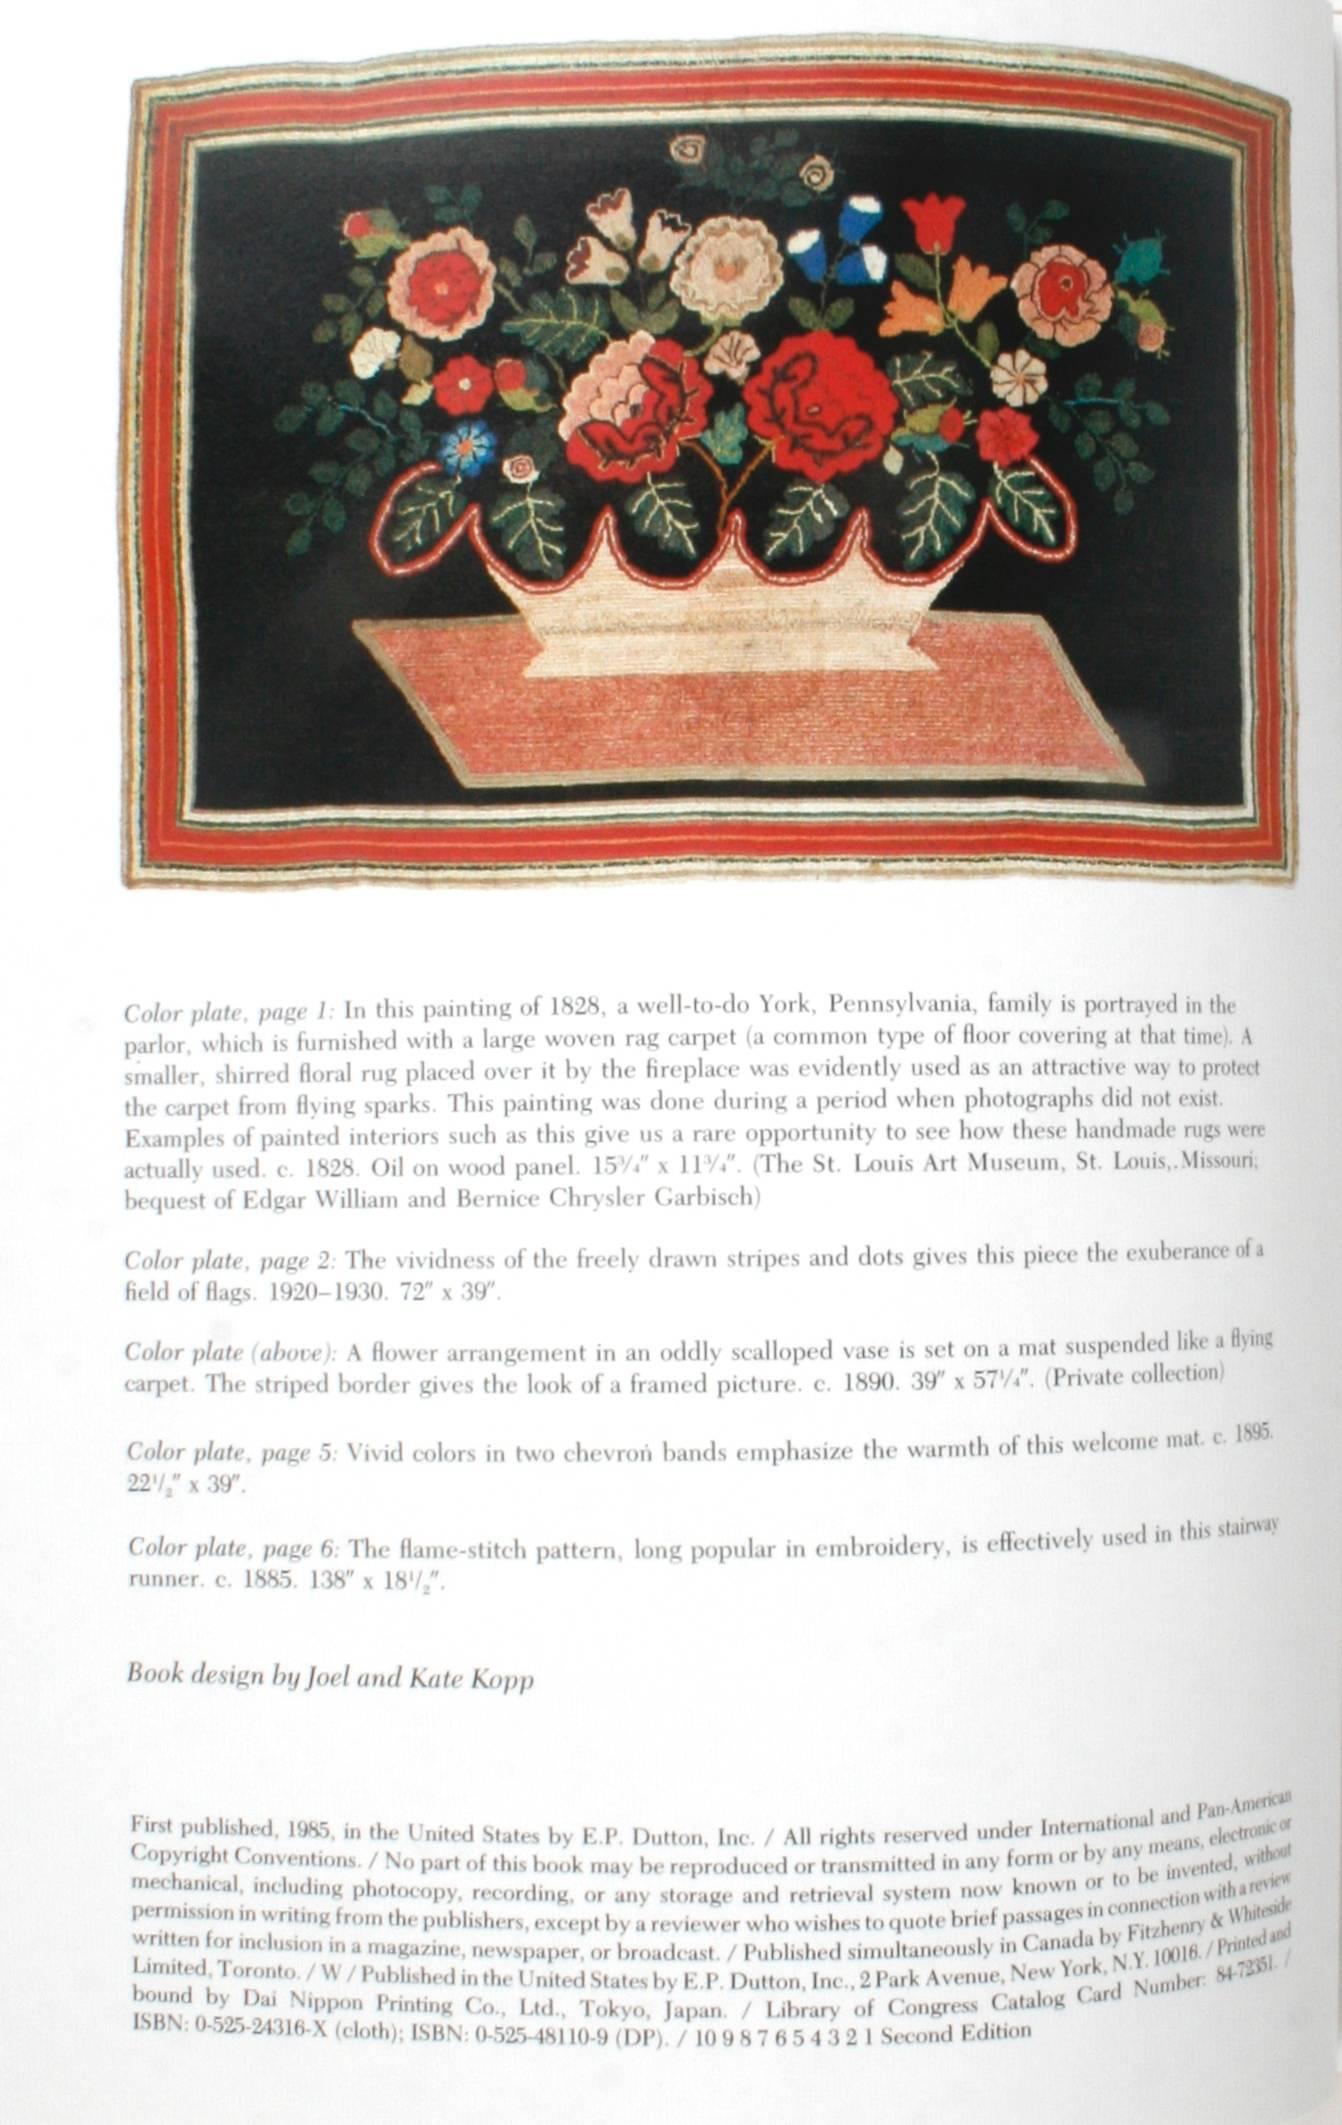 American Hooked and Sewn Rugs, Folk Art Underfoot by Joel and Kate Kopp 12